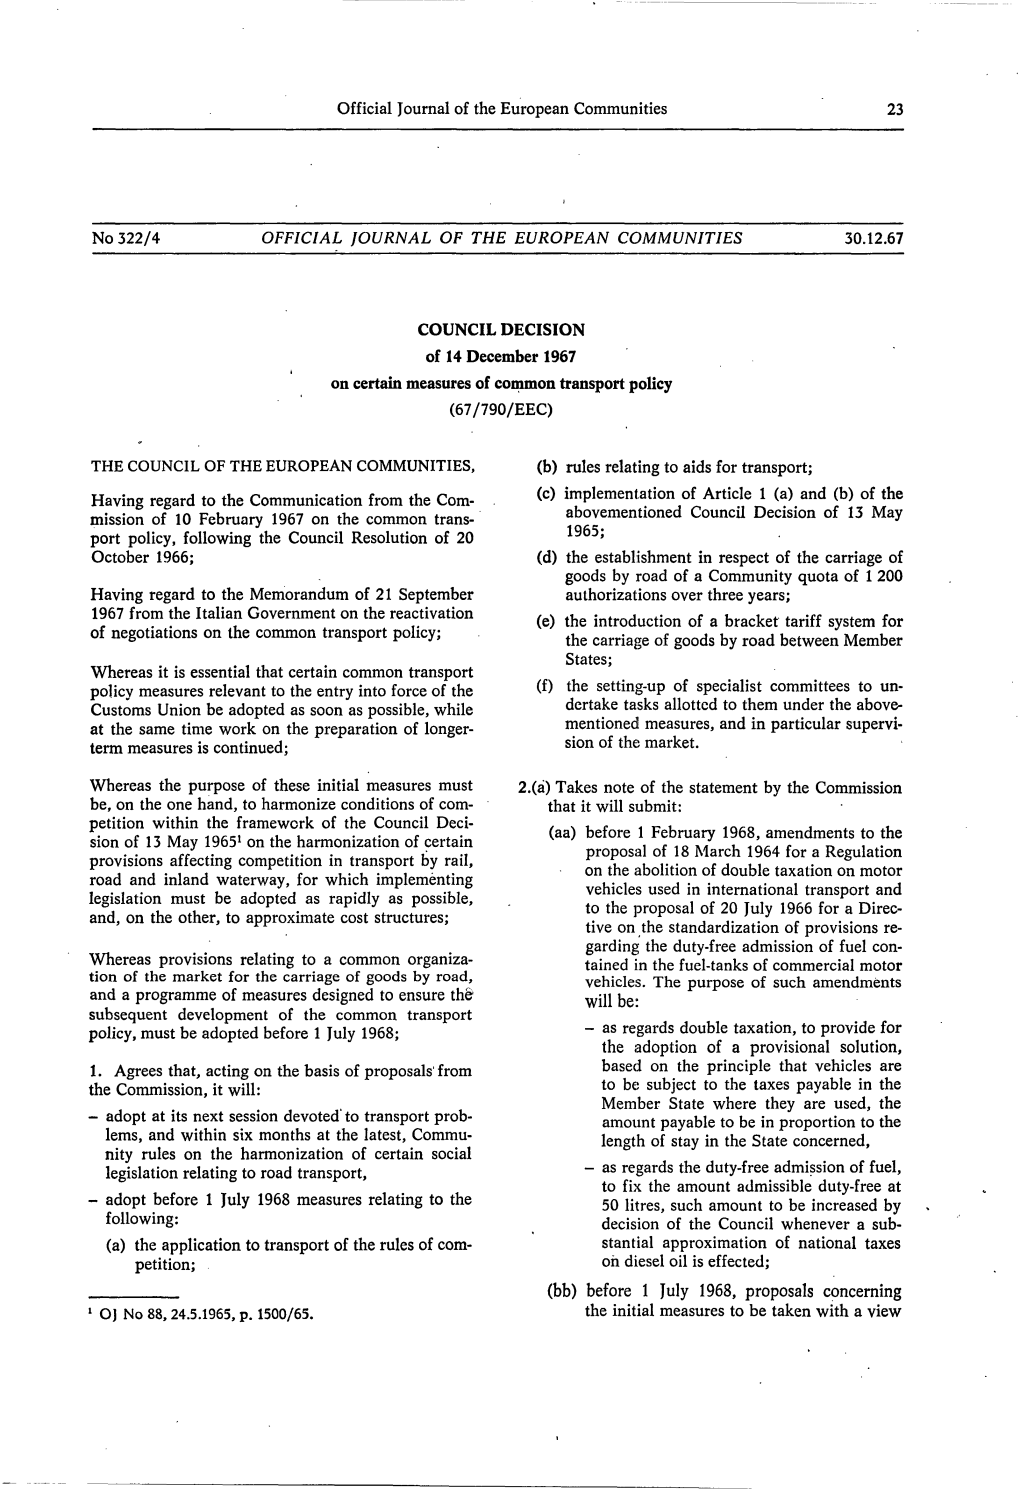 Before 1 July 1968, Proposals Concerning 1 OJ No 88, 24.5.1965, P